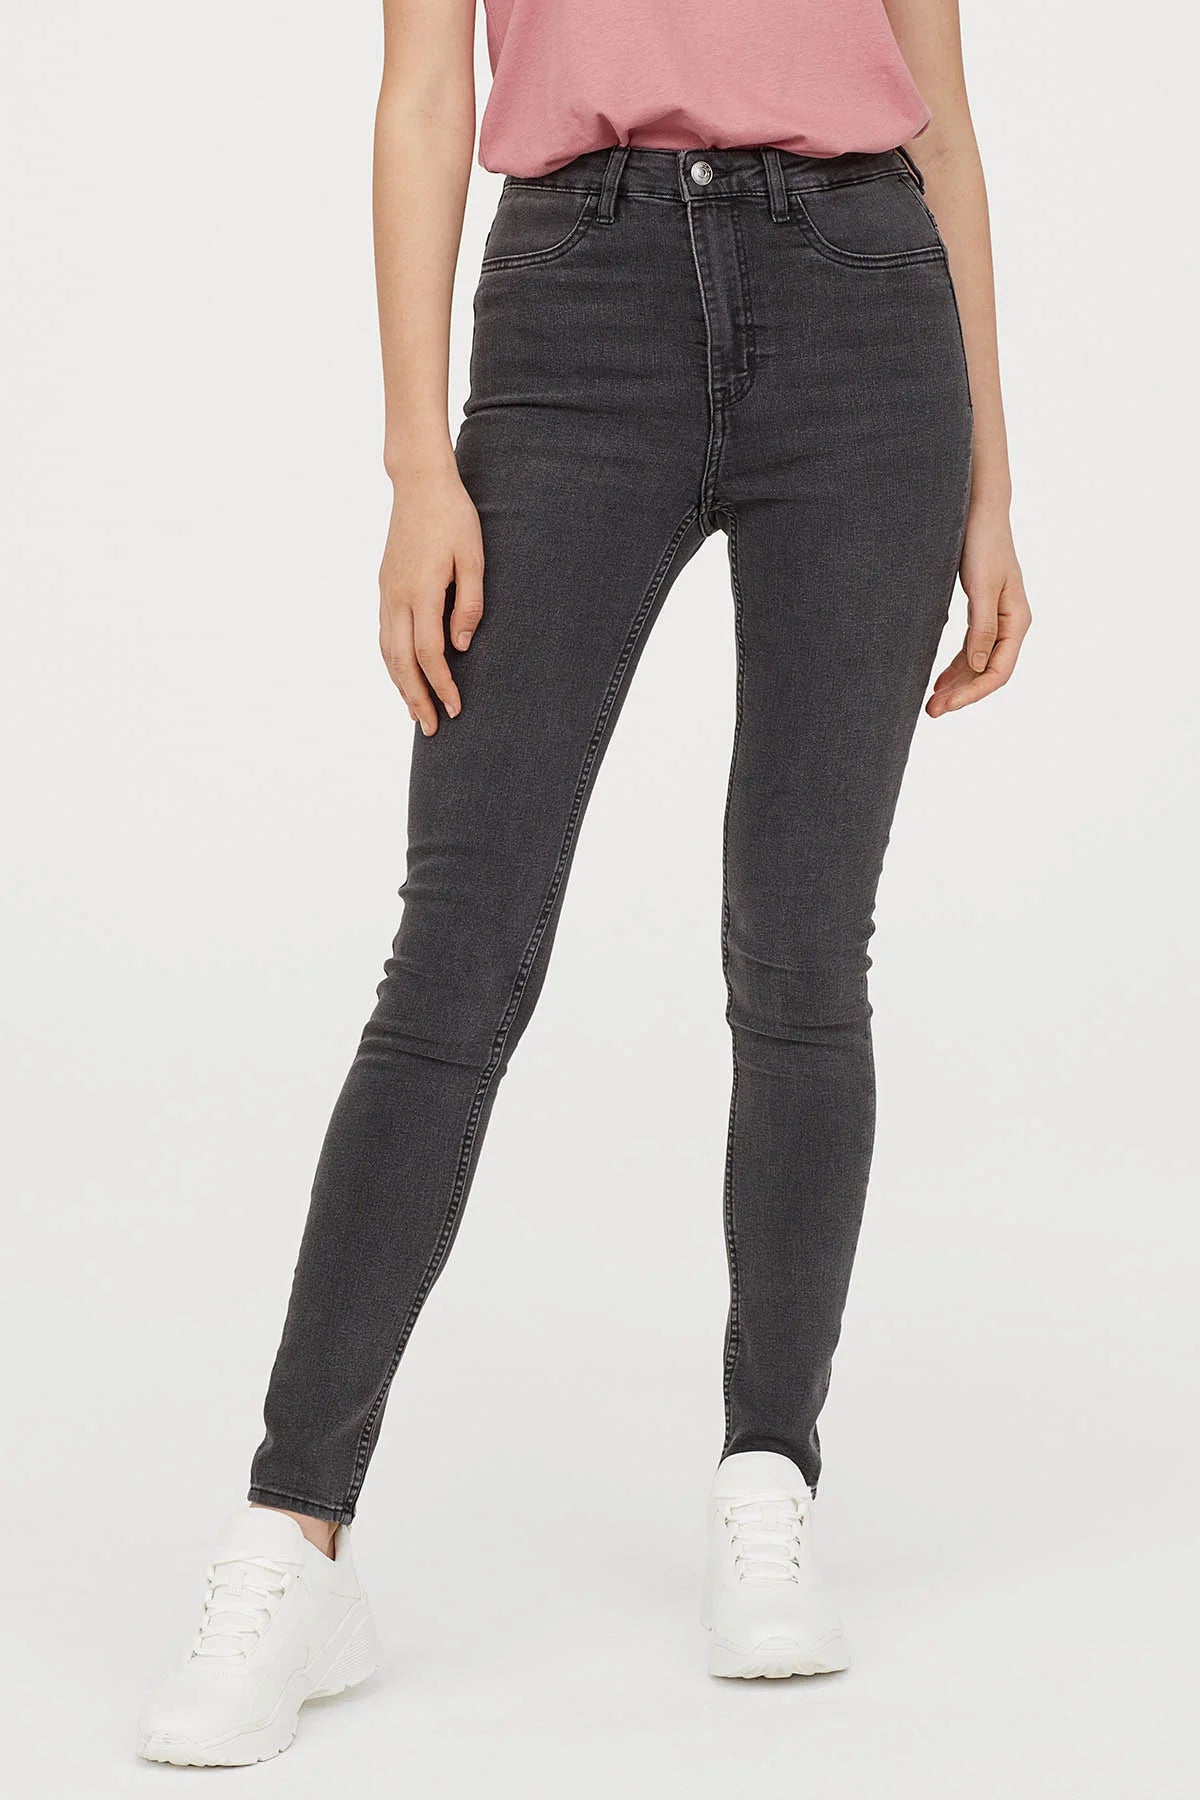 H&M Super Skinny Jeans Charcoal / 6